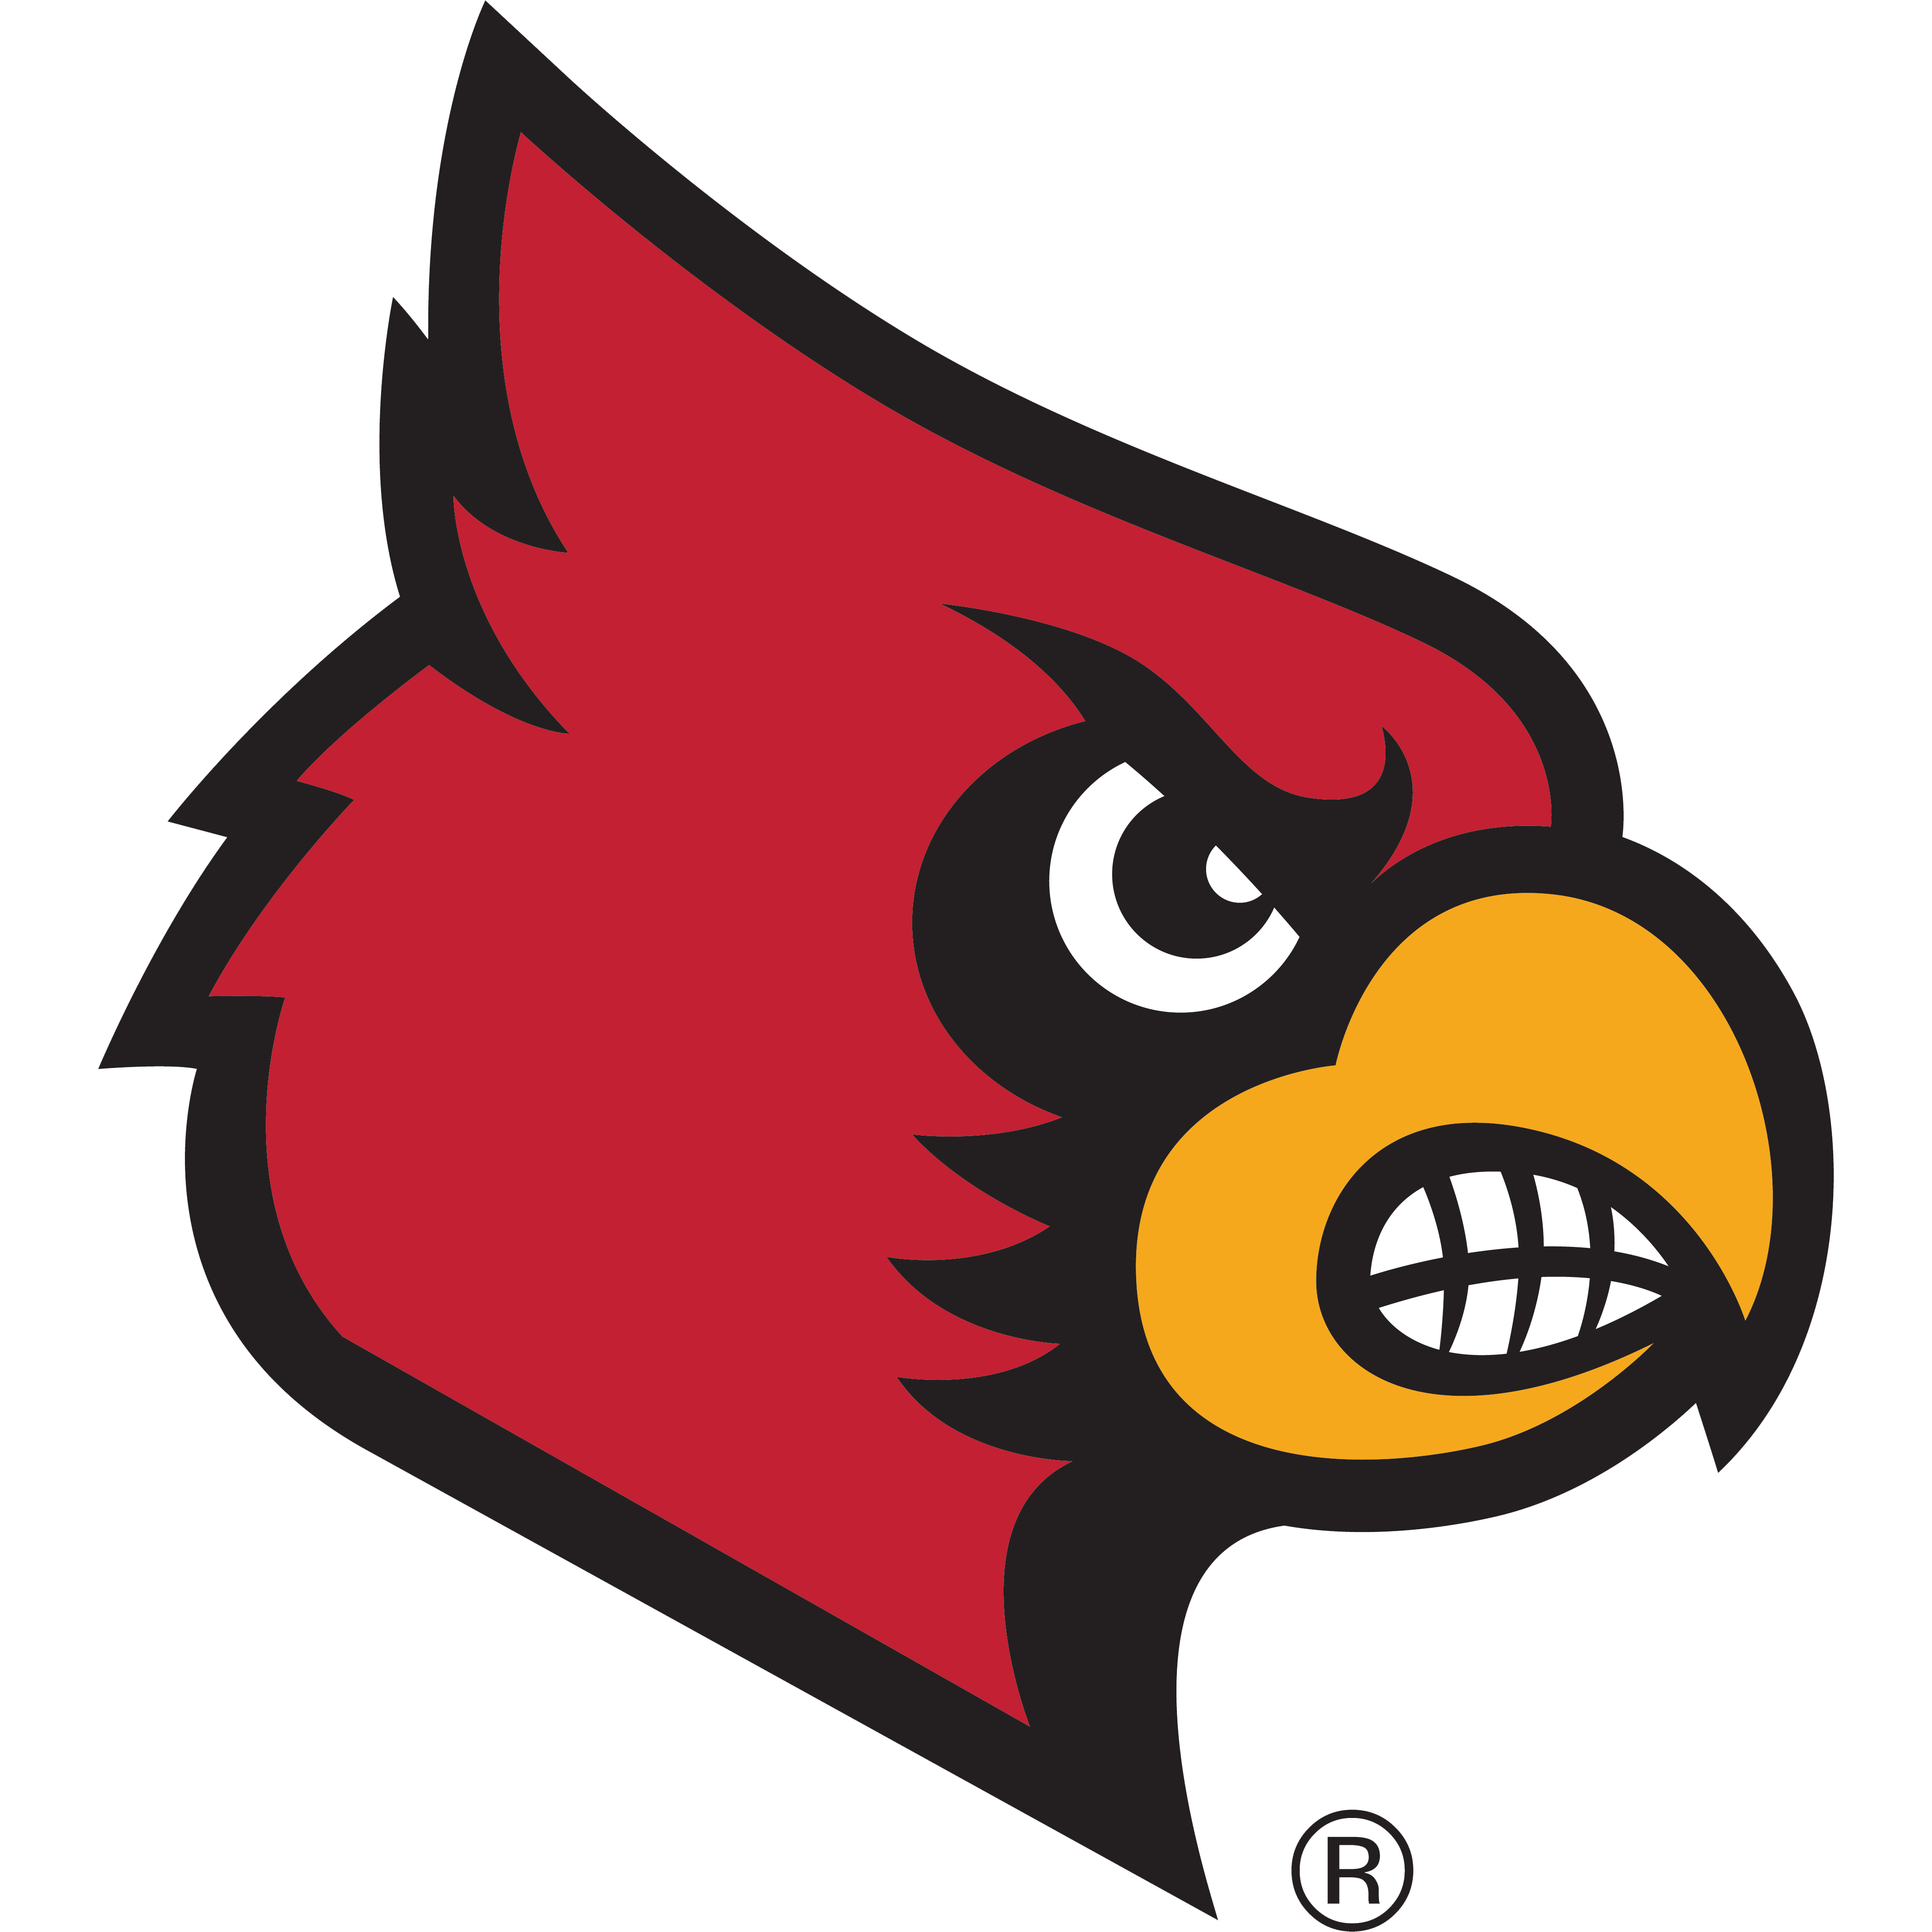 University of Louisville Cardinals